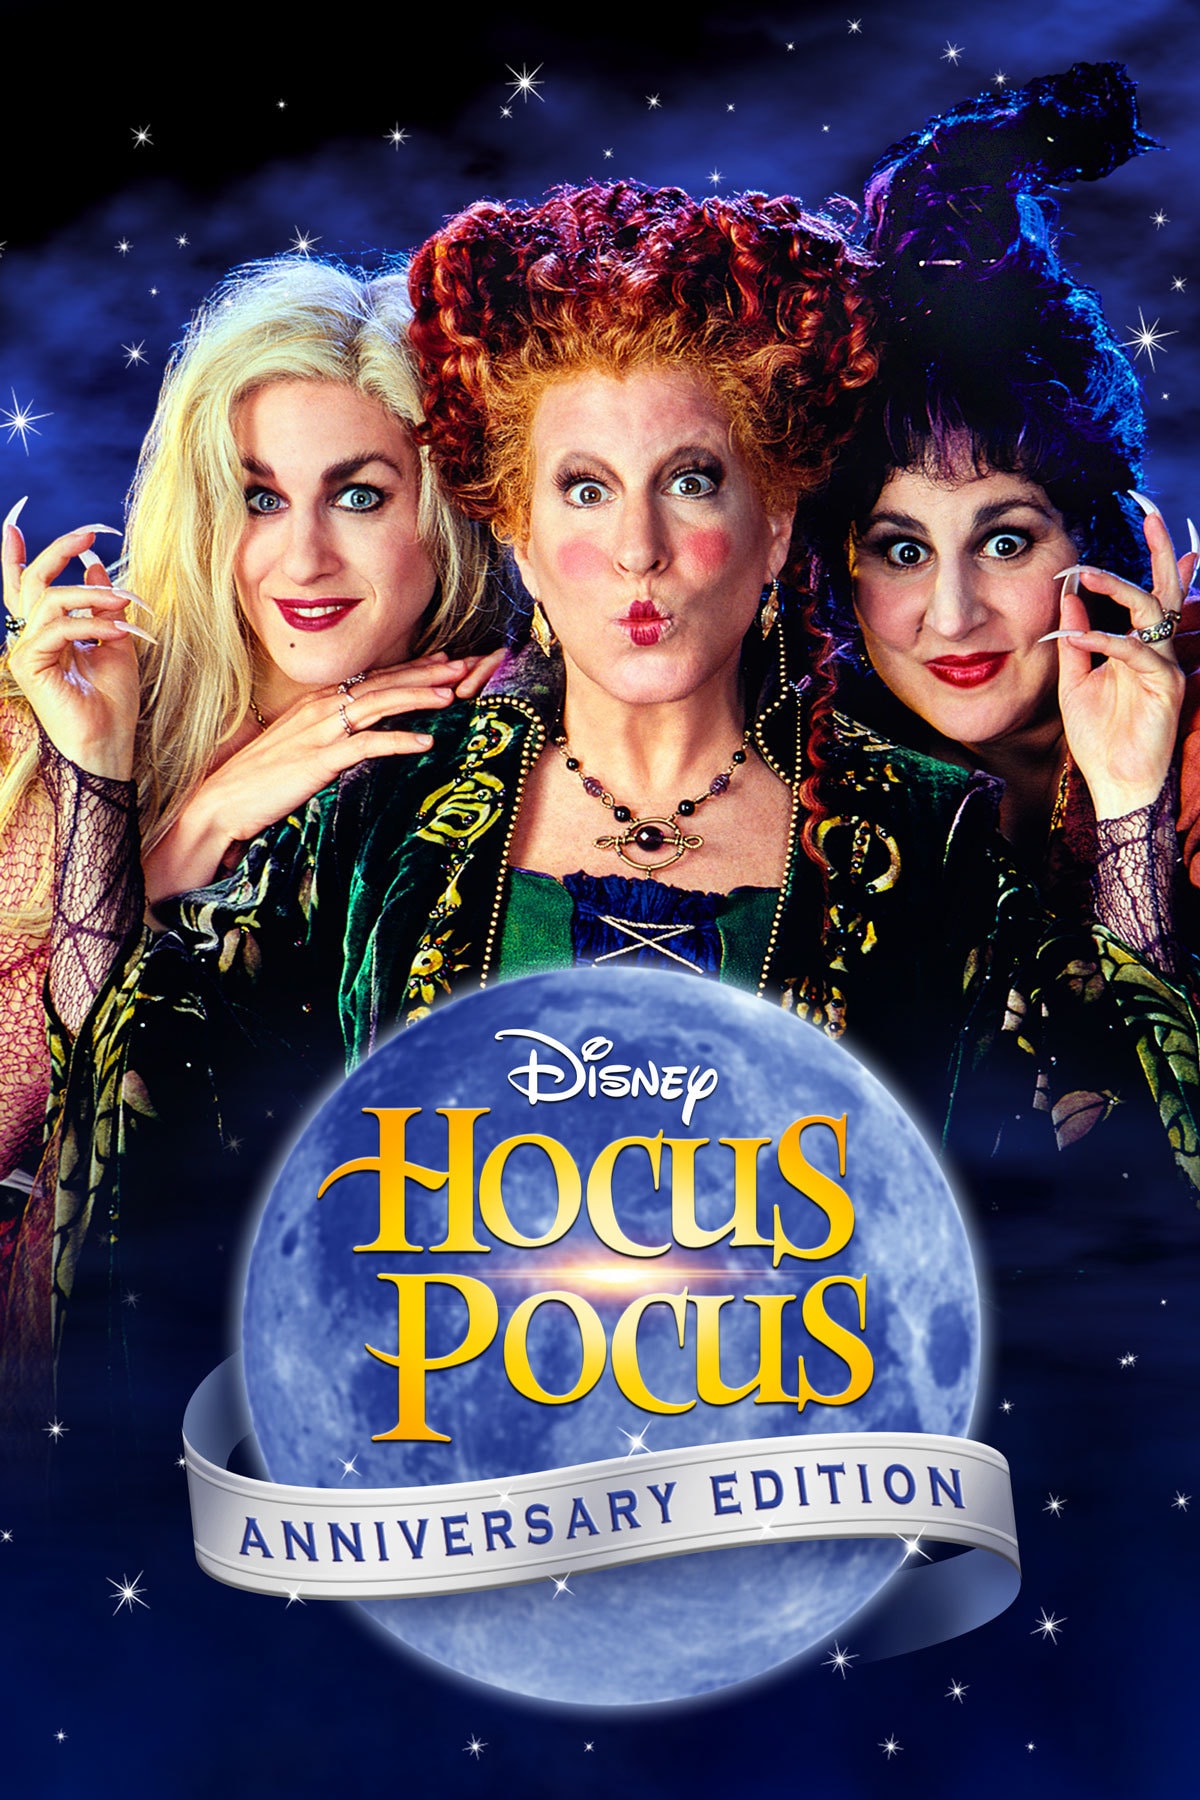 It seems that Disney's Movie 'Hocus Pocus' will get a sequel soon? But